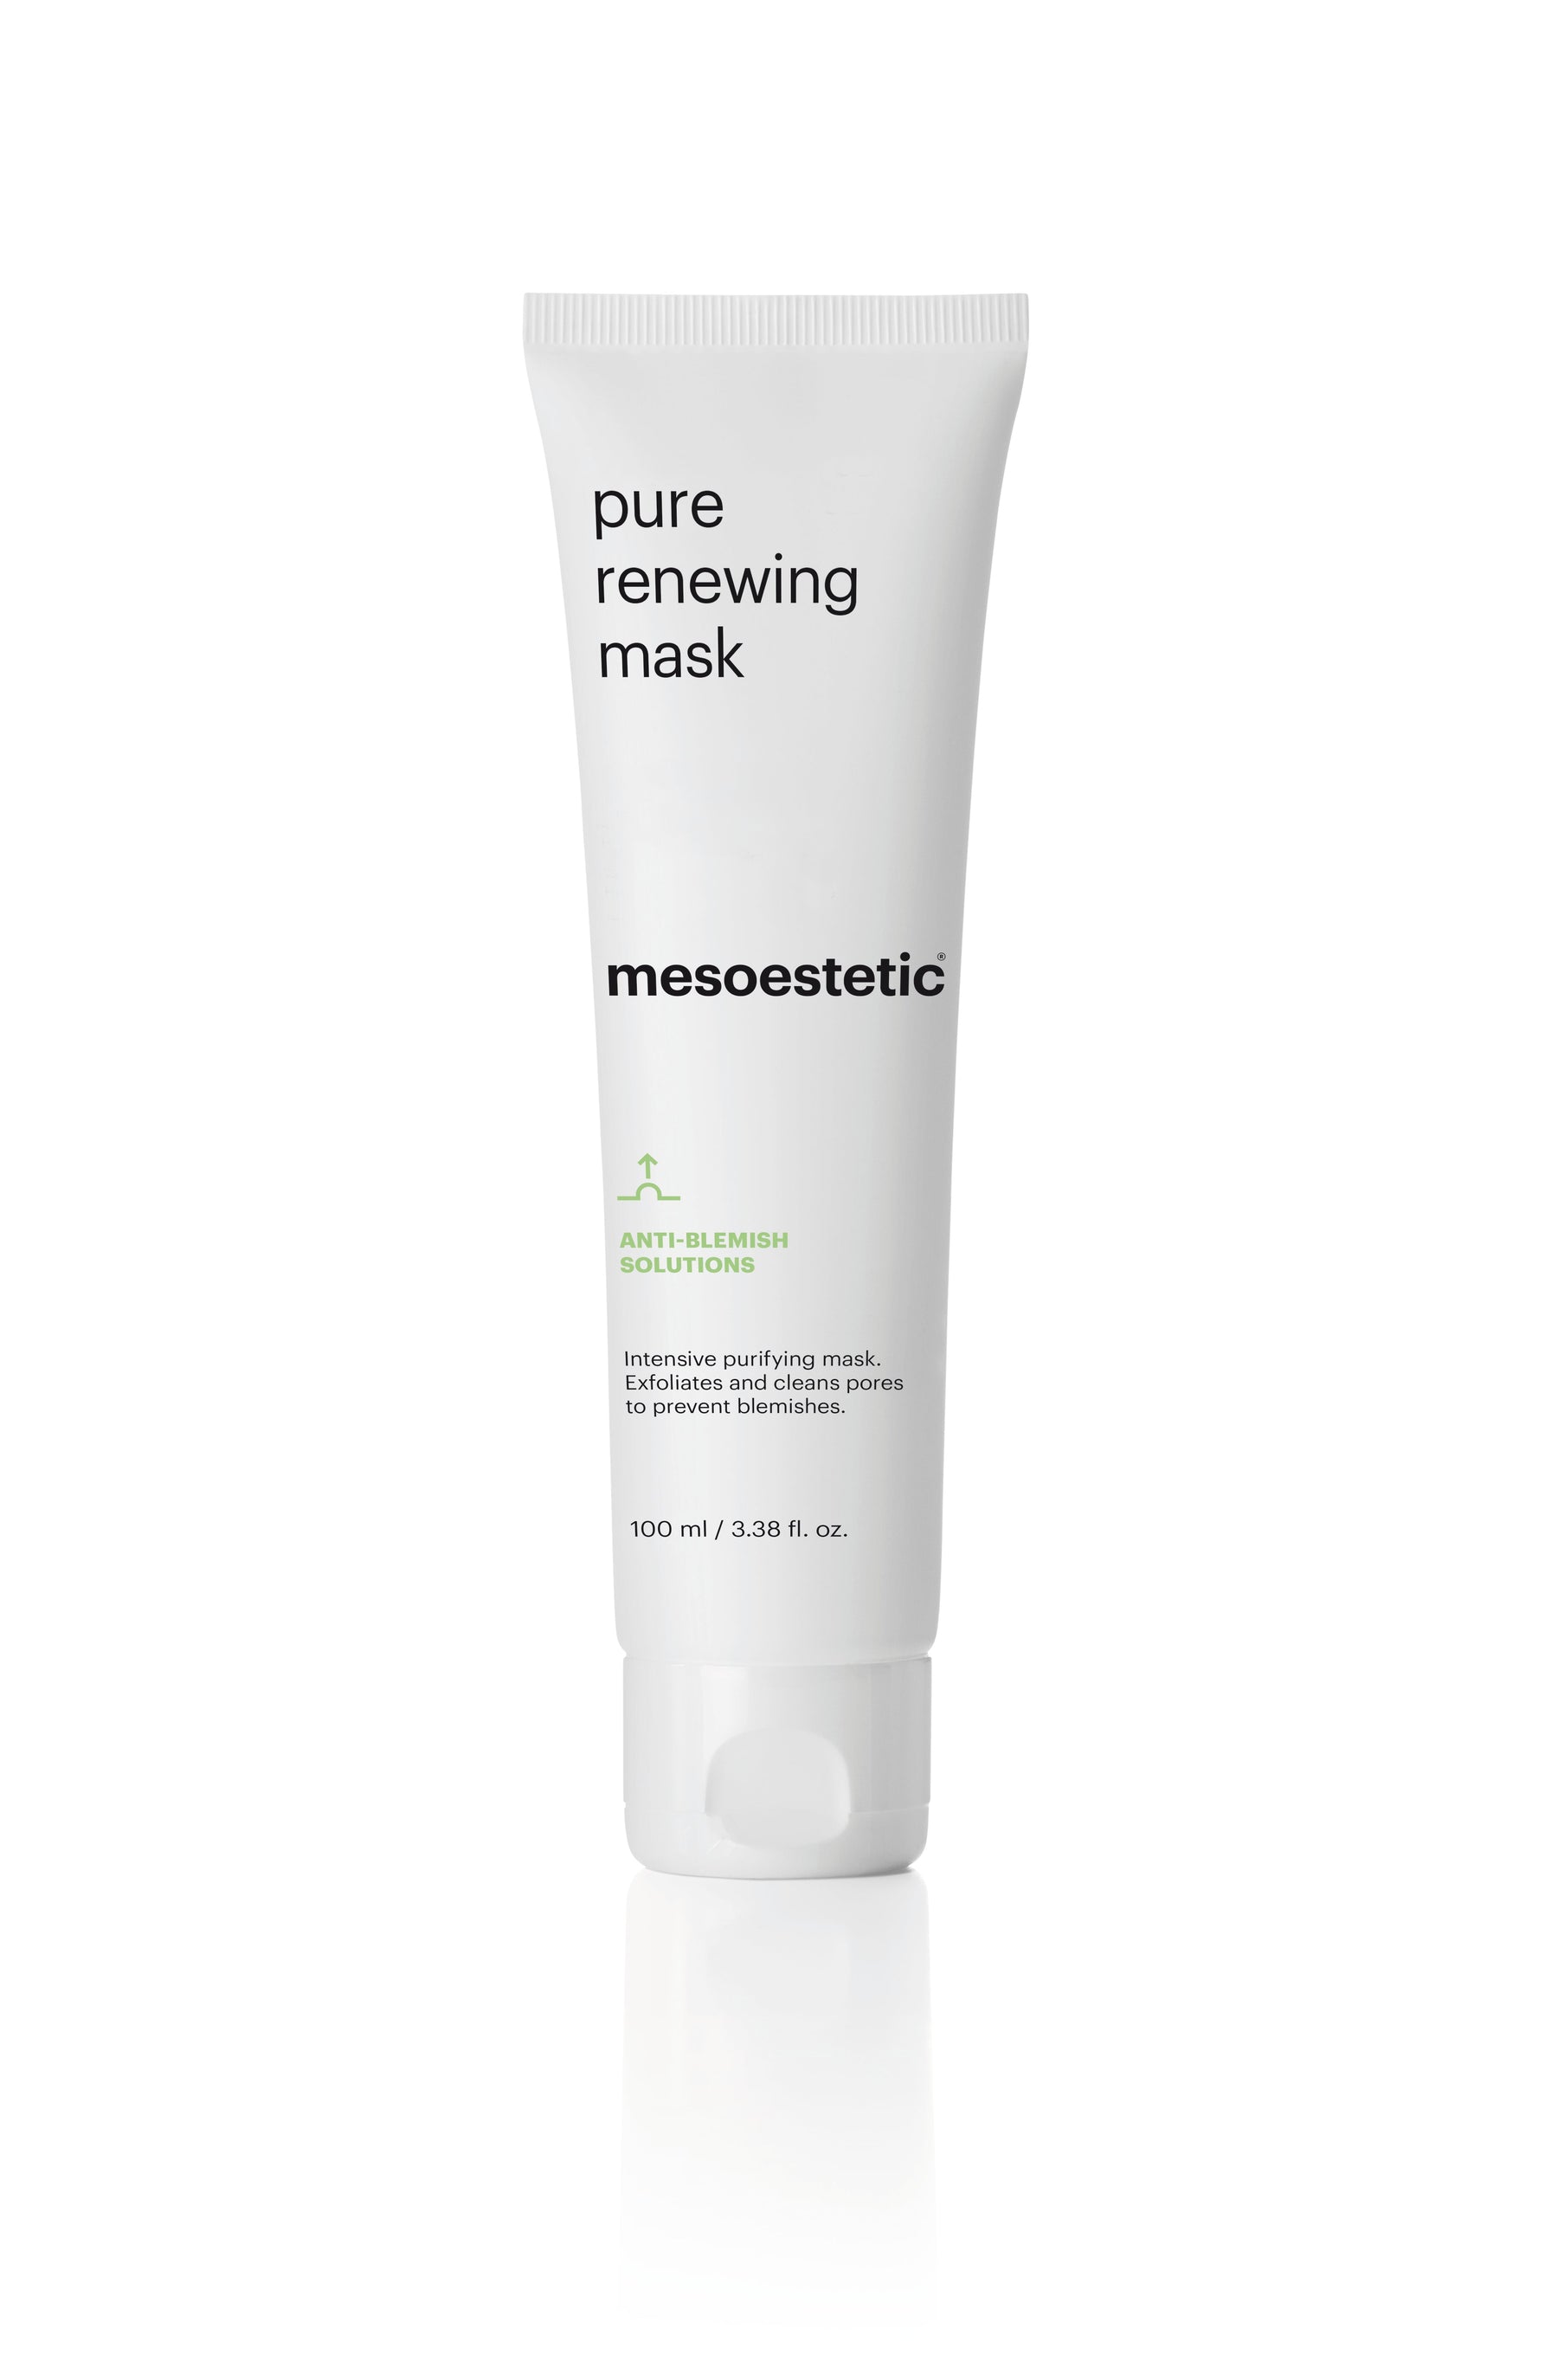 mesoestetic pure renewing mask 100ml